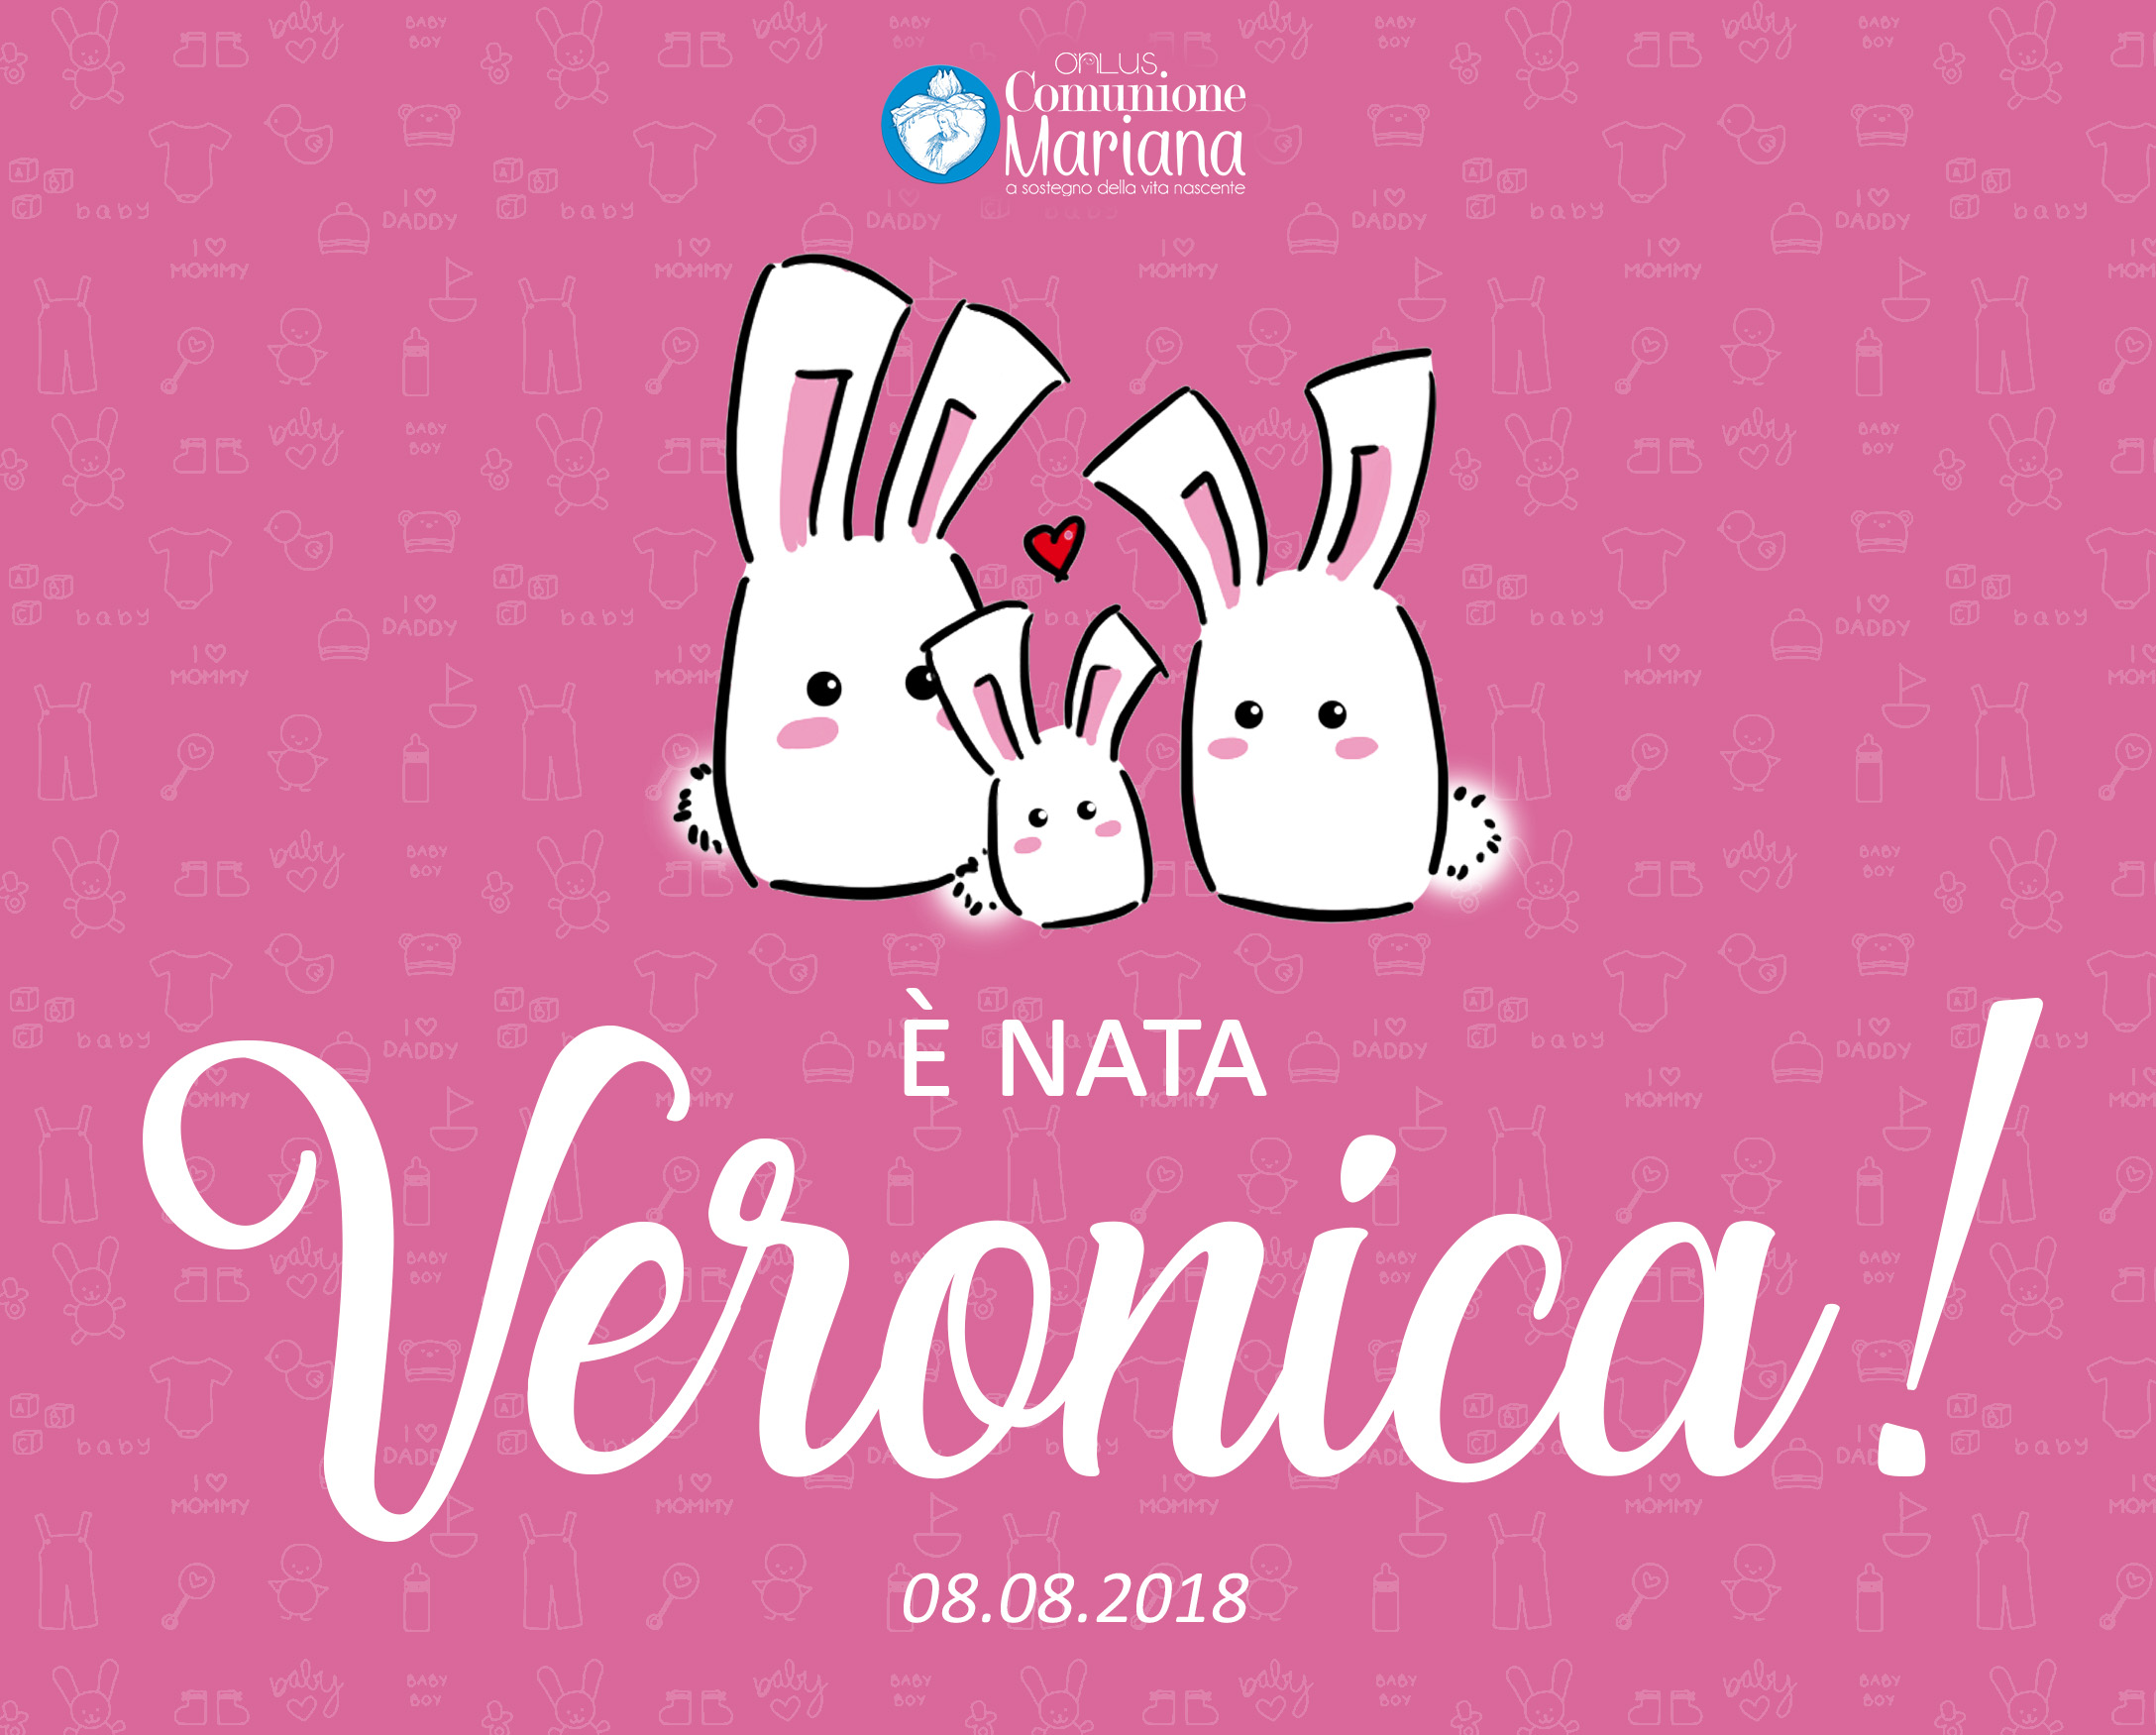 20. Veronica